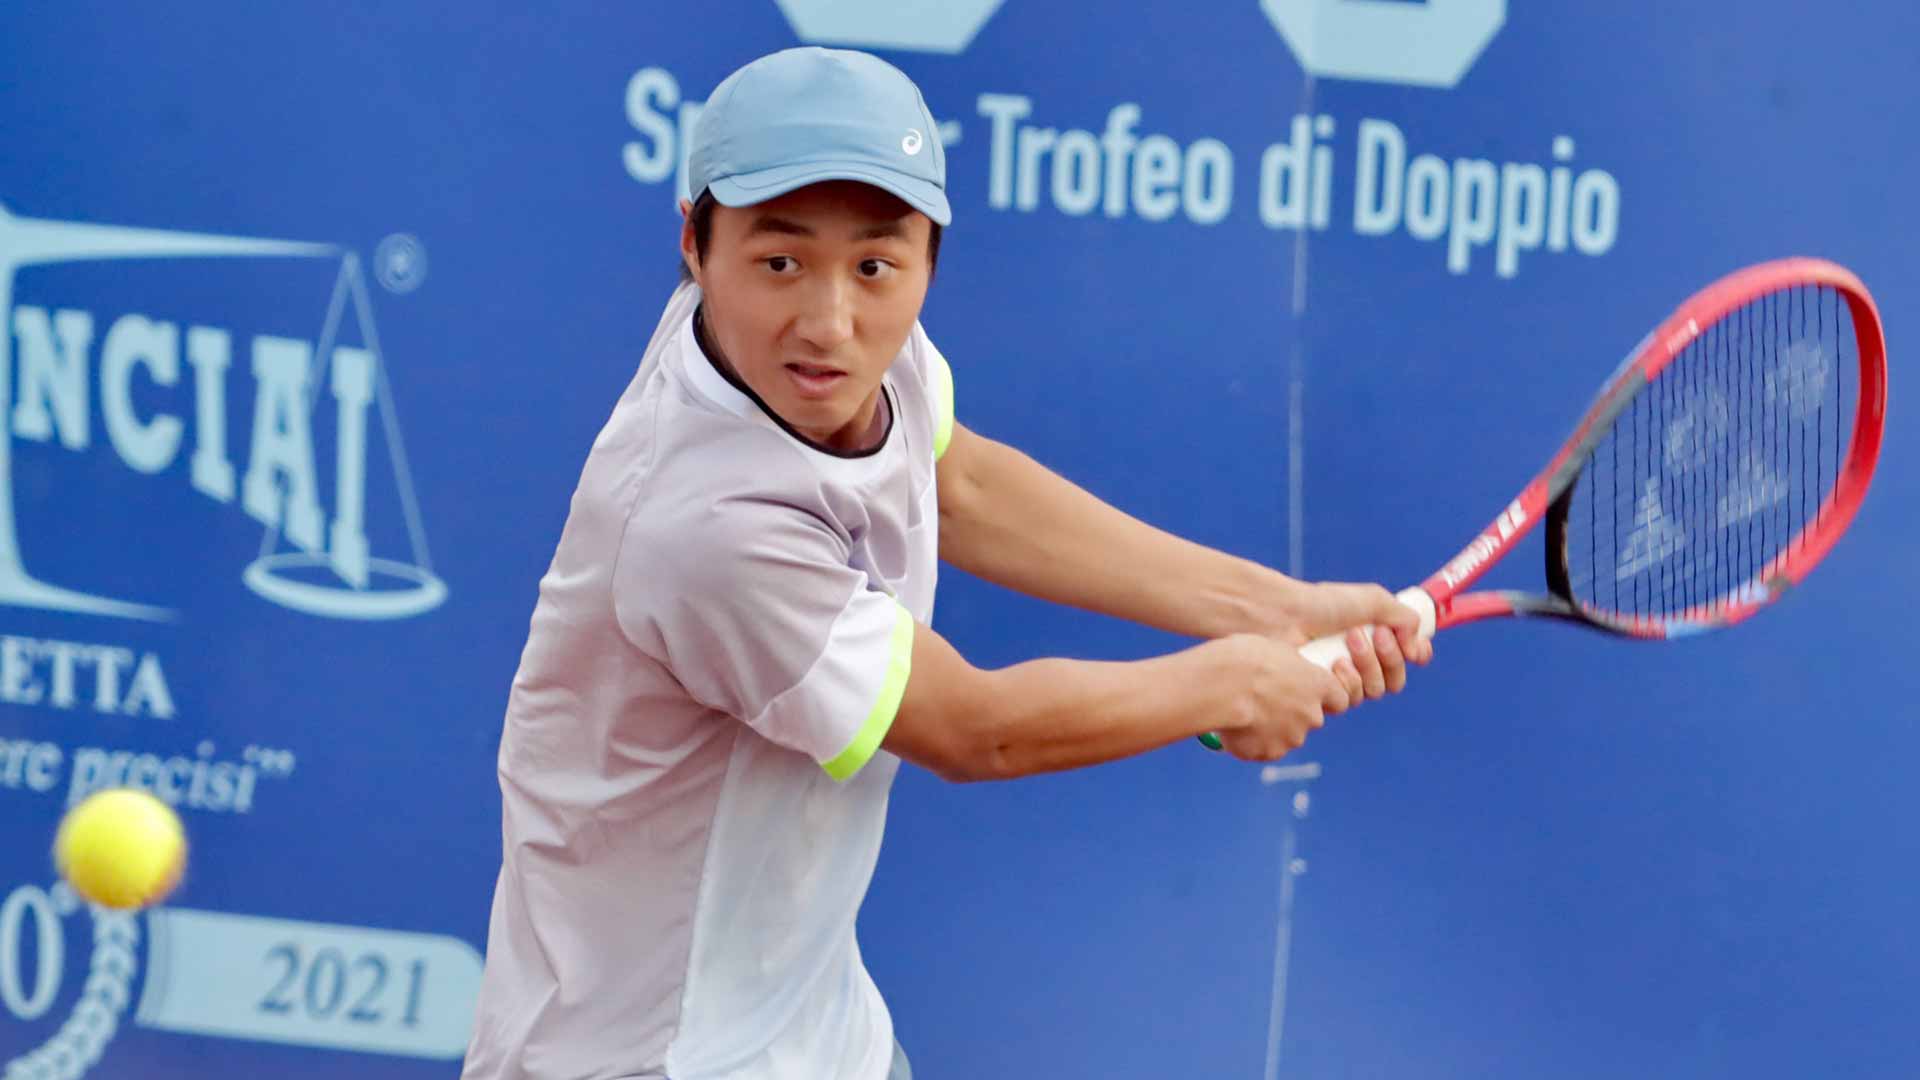 Shintaro Mochizuki earns his maiden ATP Challenger Tour trophy in Barletta, Italy.